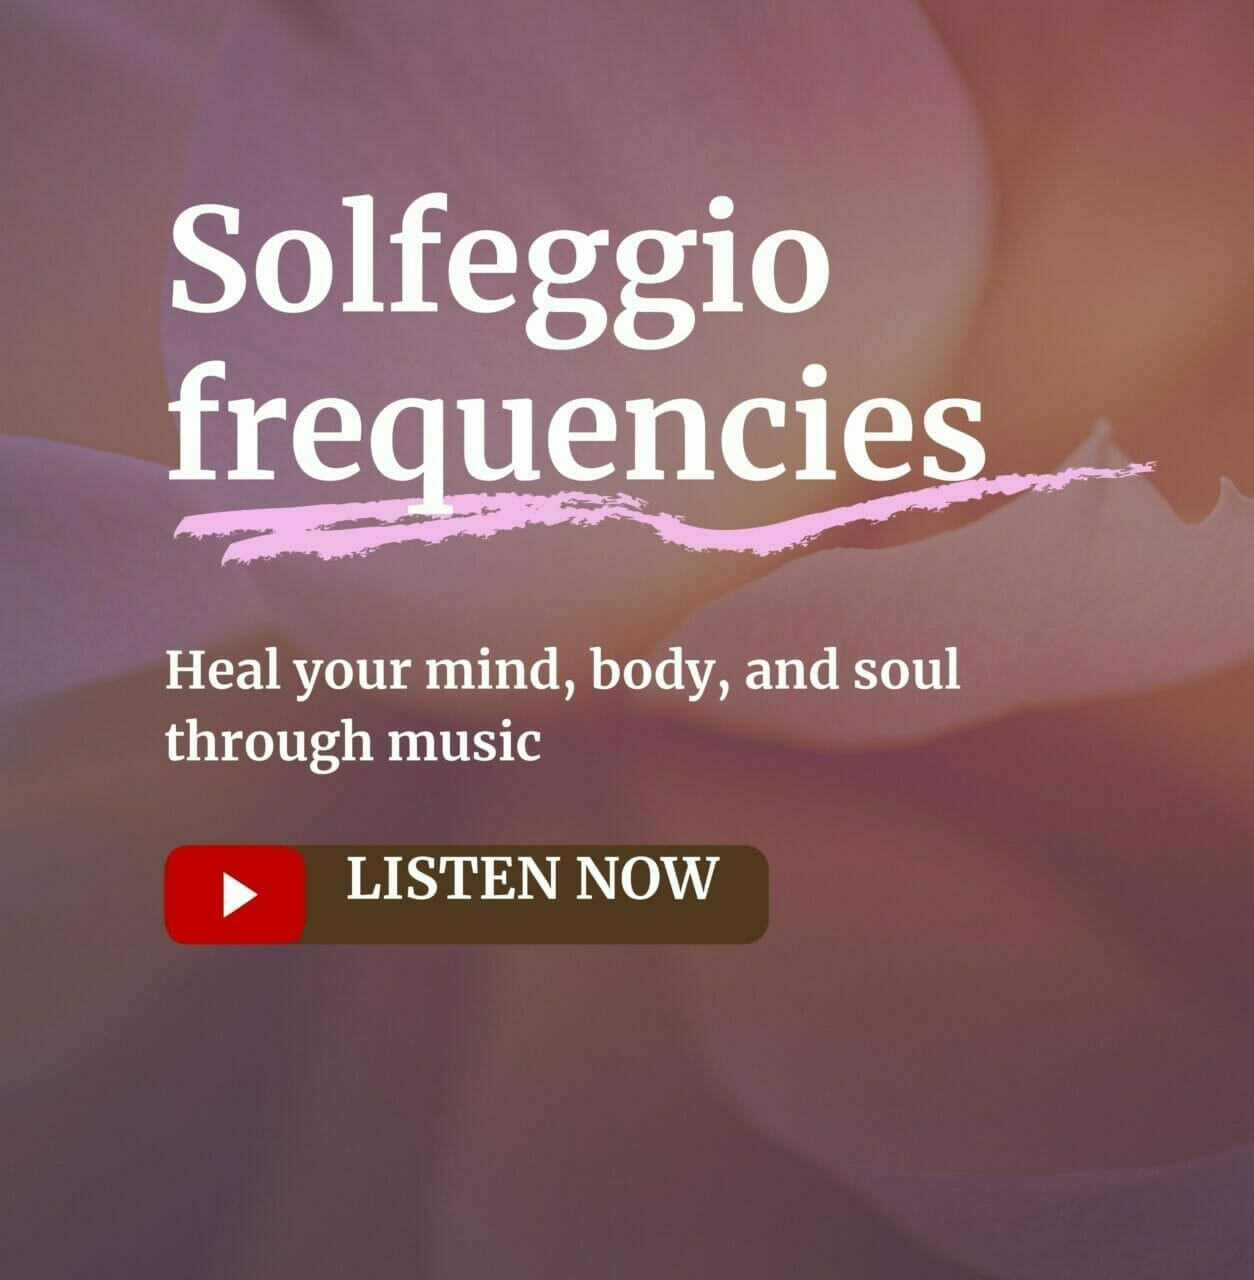 Solfeggio frequencies playlist